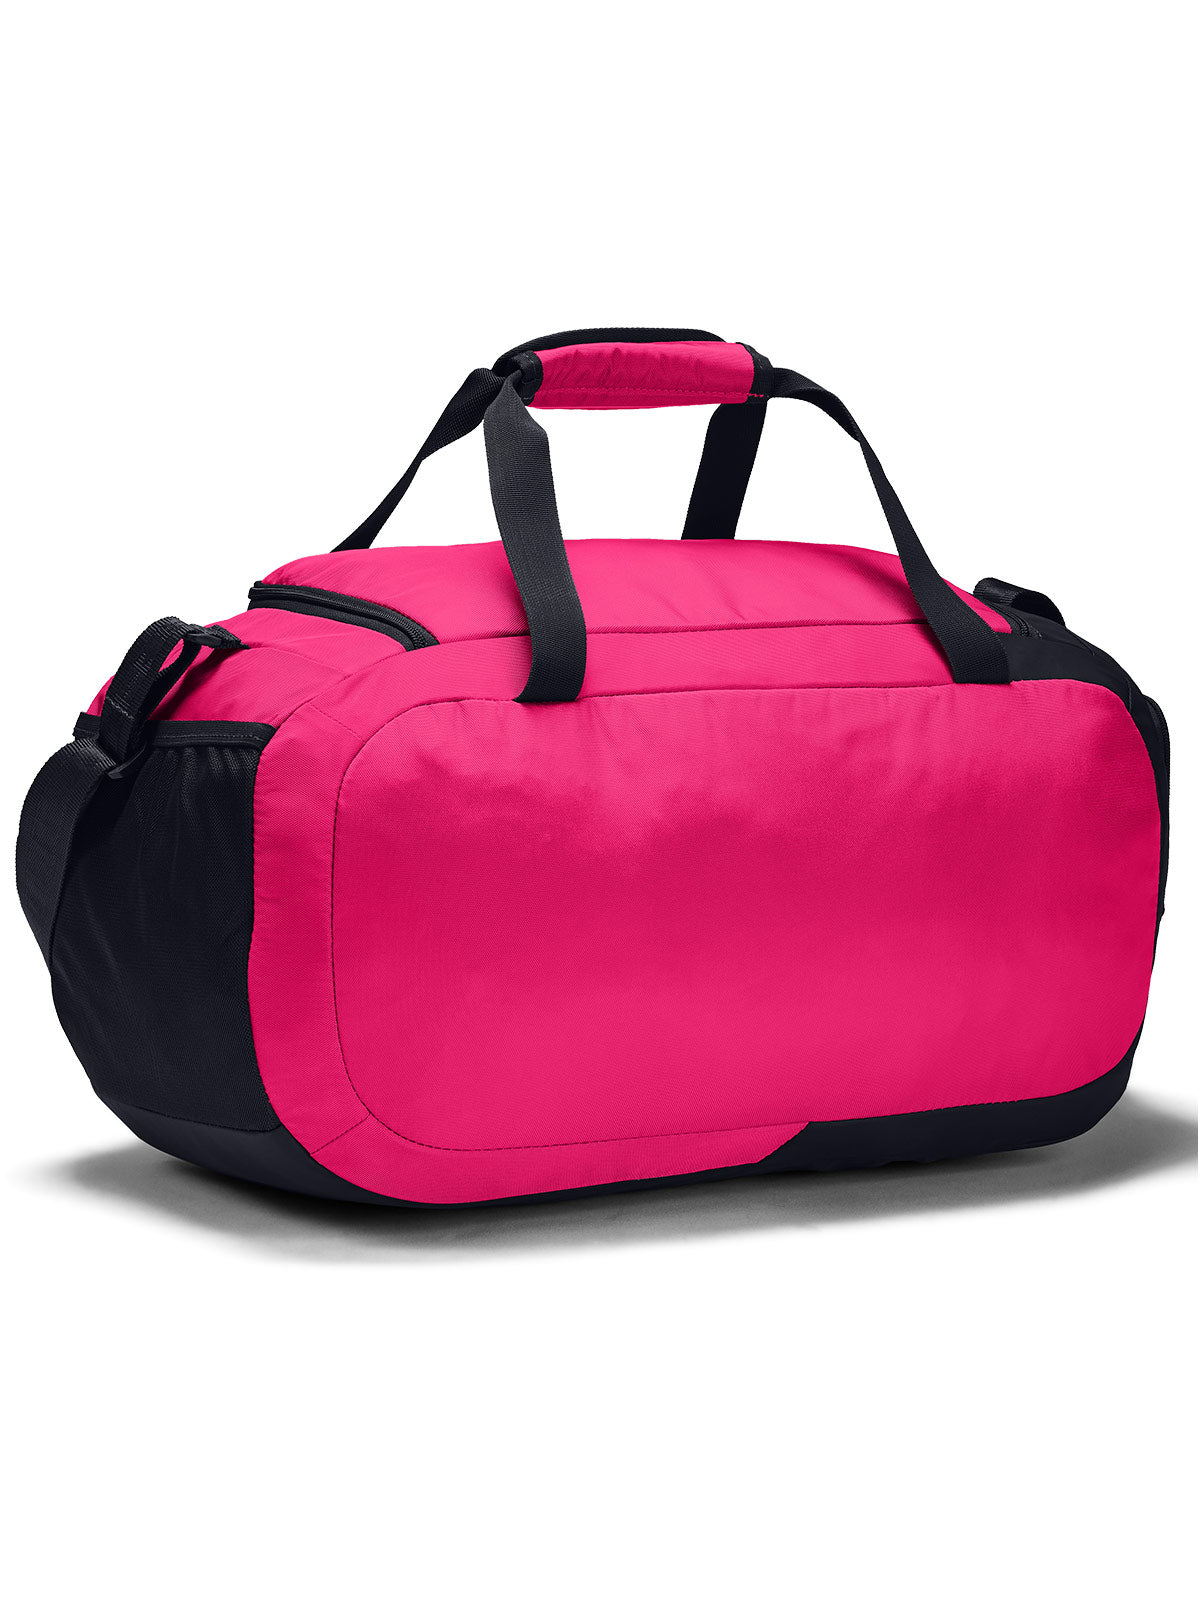 UA Undeniable 4.0 Small Duffle Bag